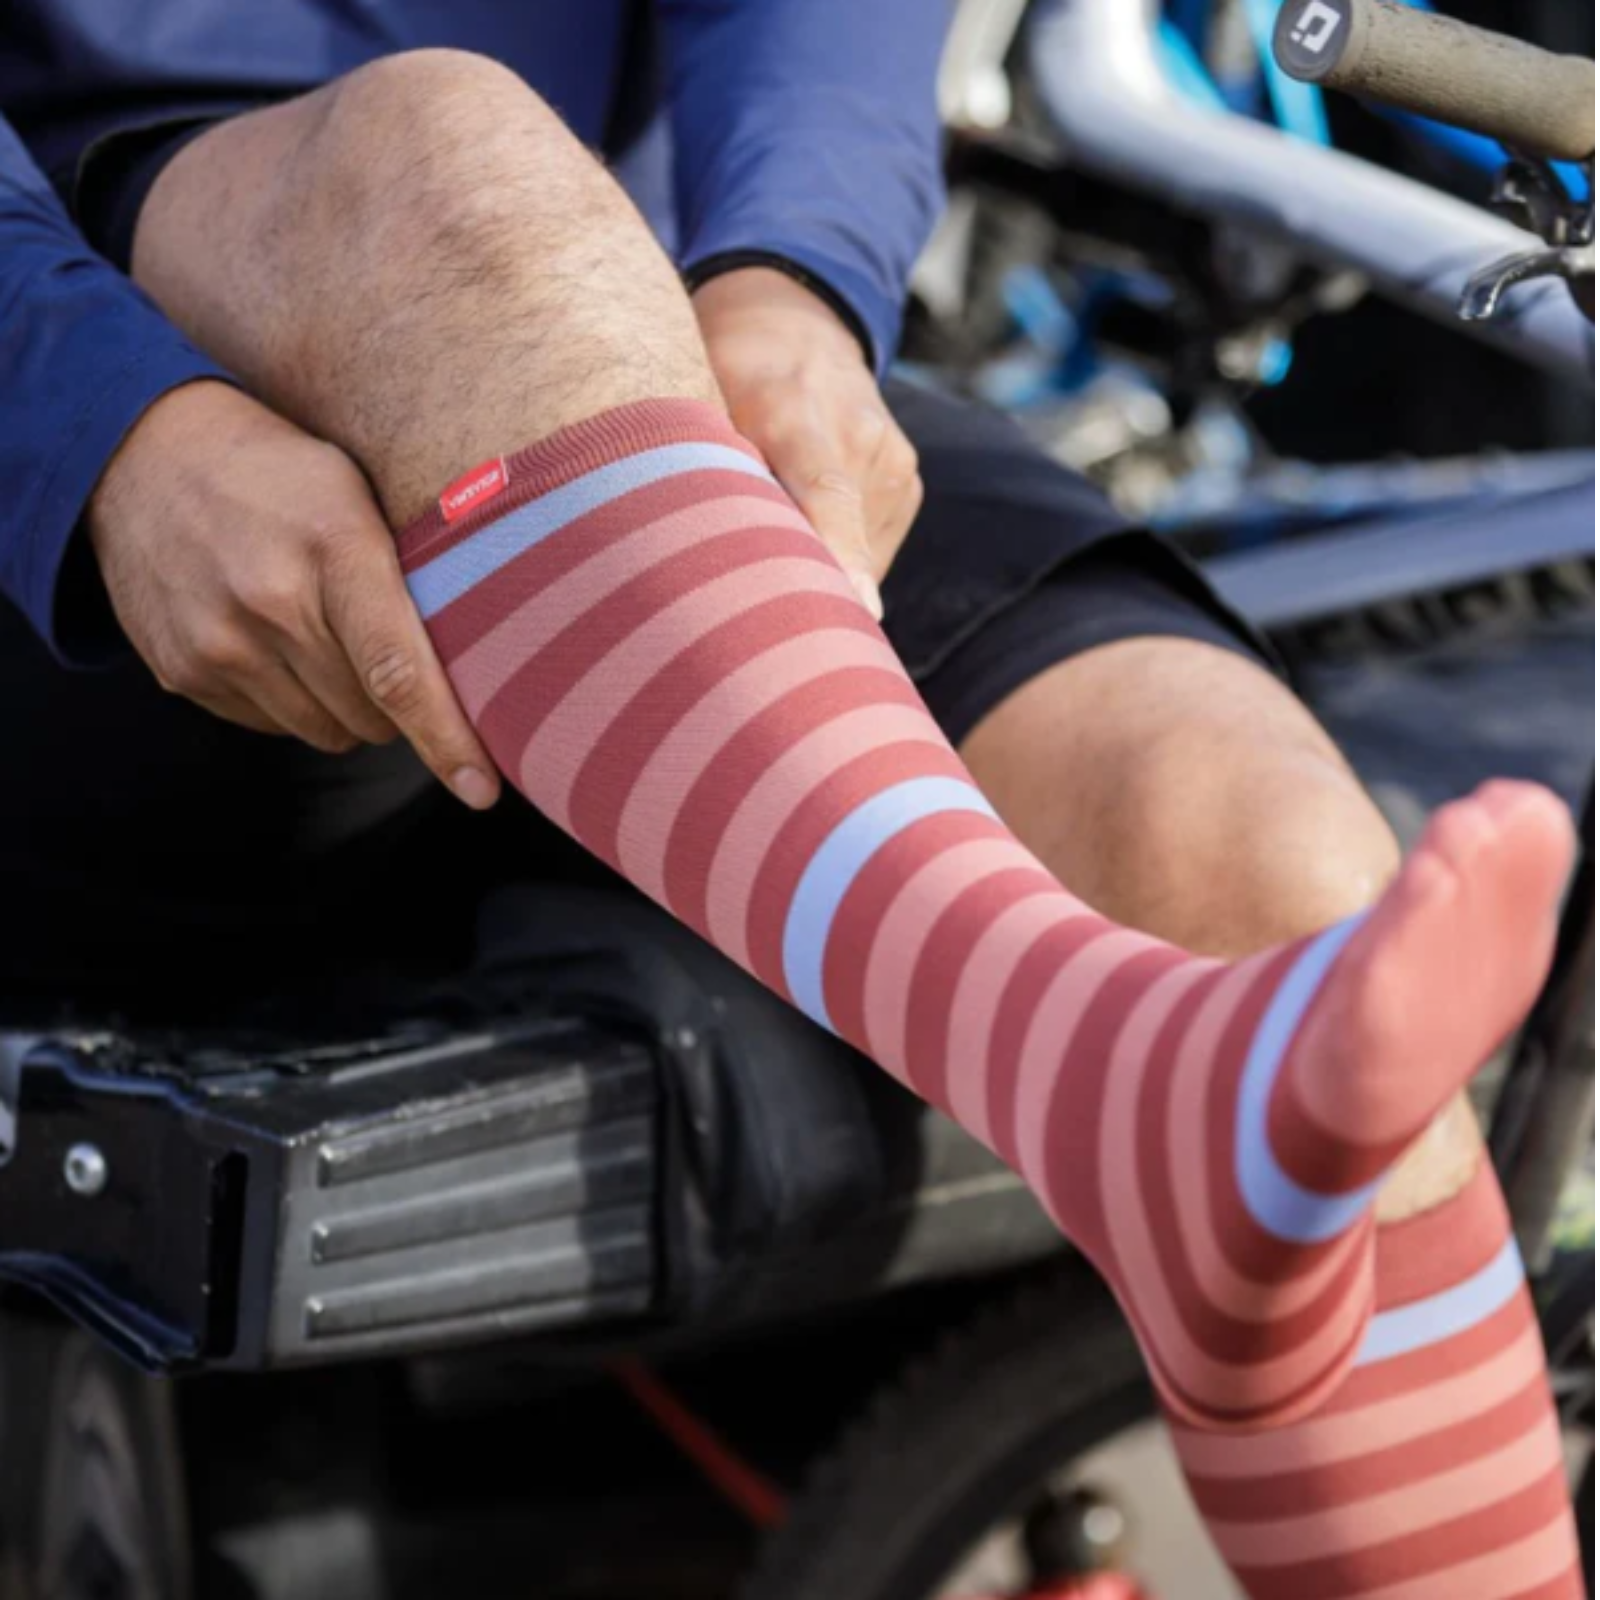 Men's Everyday Compression Sock 3-Pack (15-20mmHg)